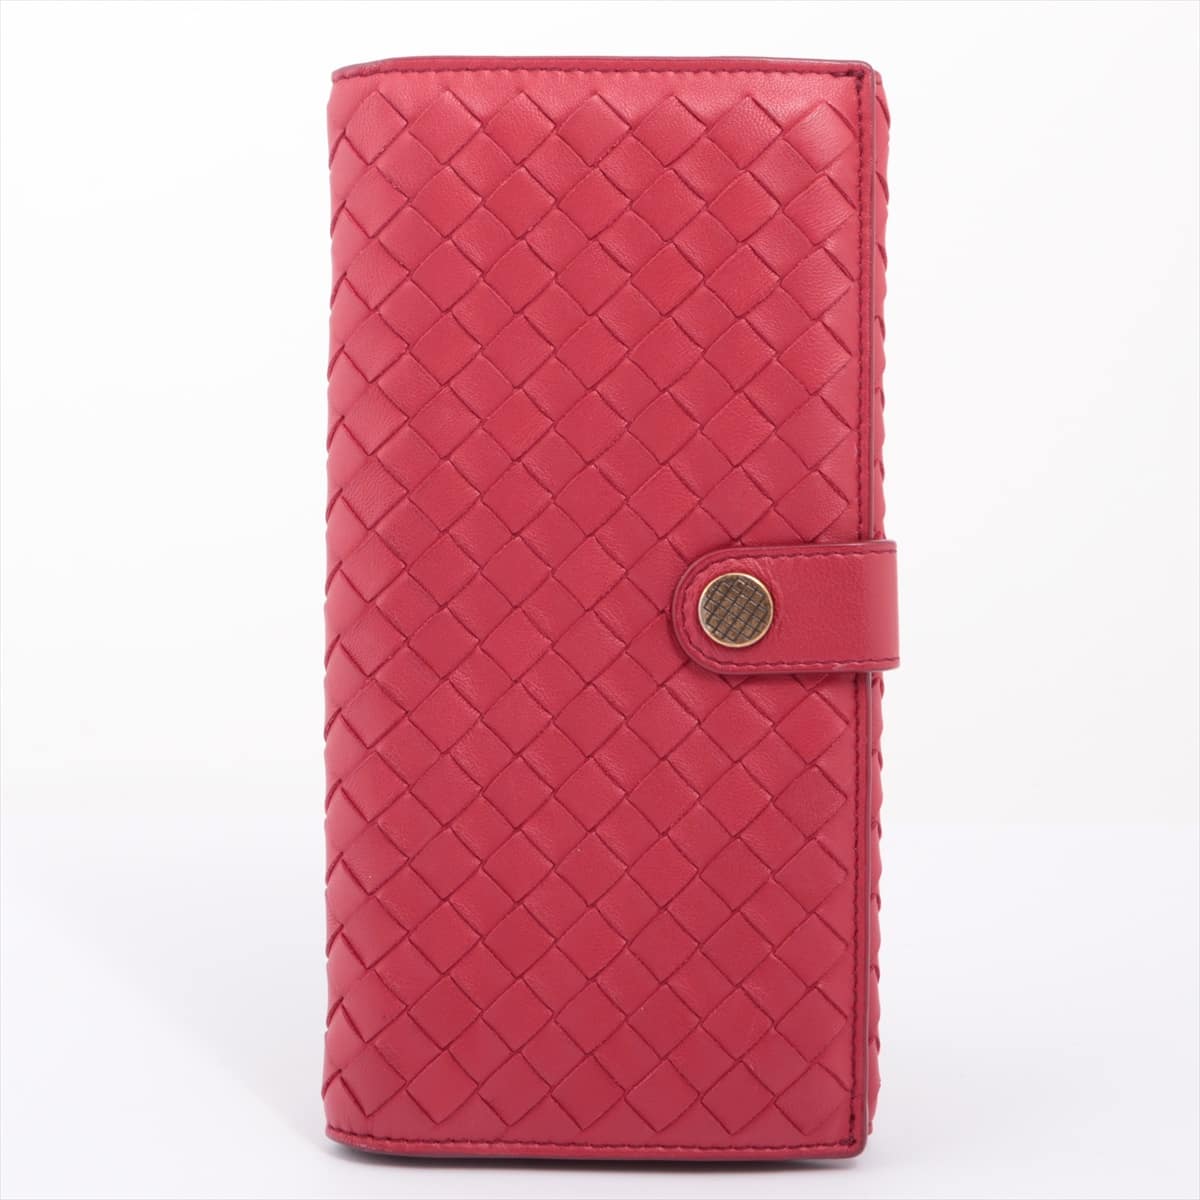 Bottega Veneta Intrecciato Leather Wallet Red